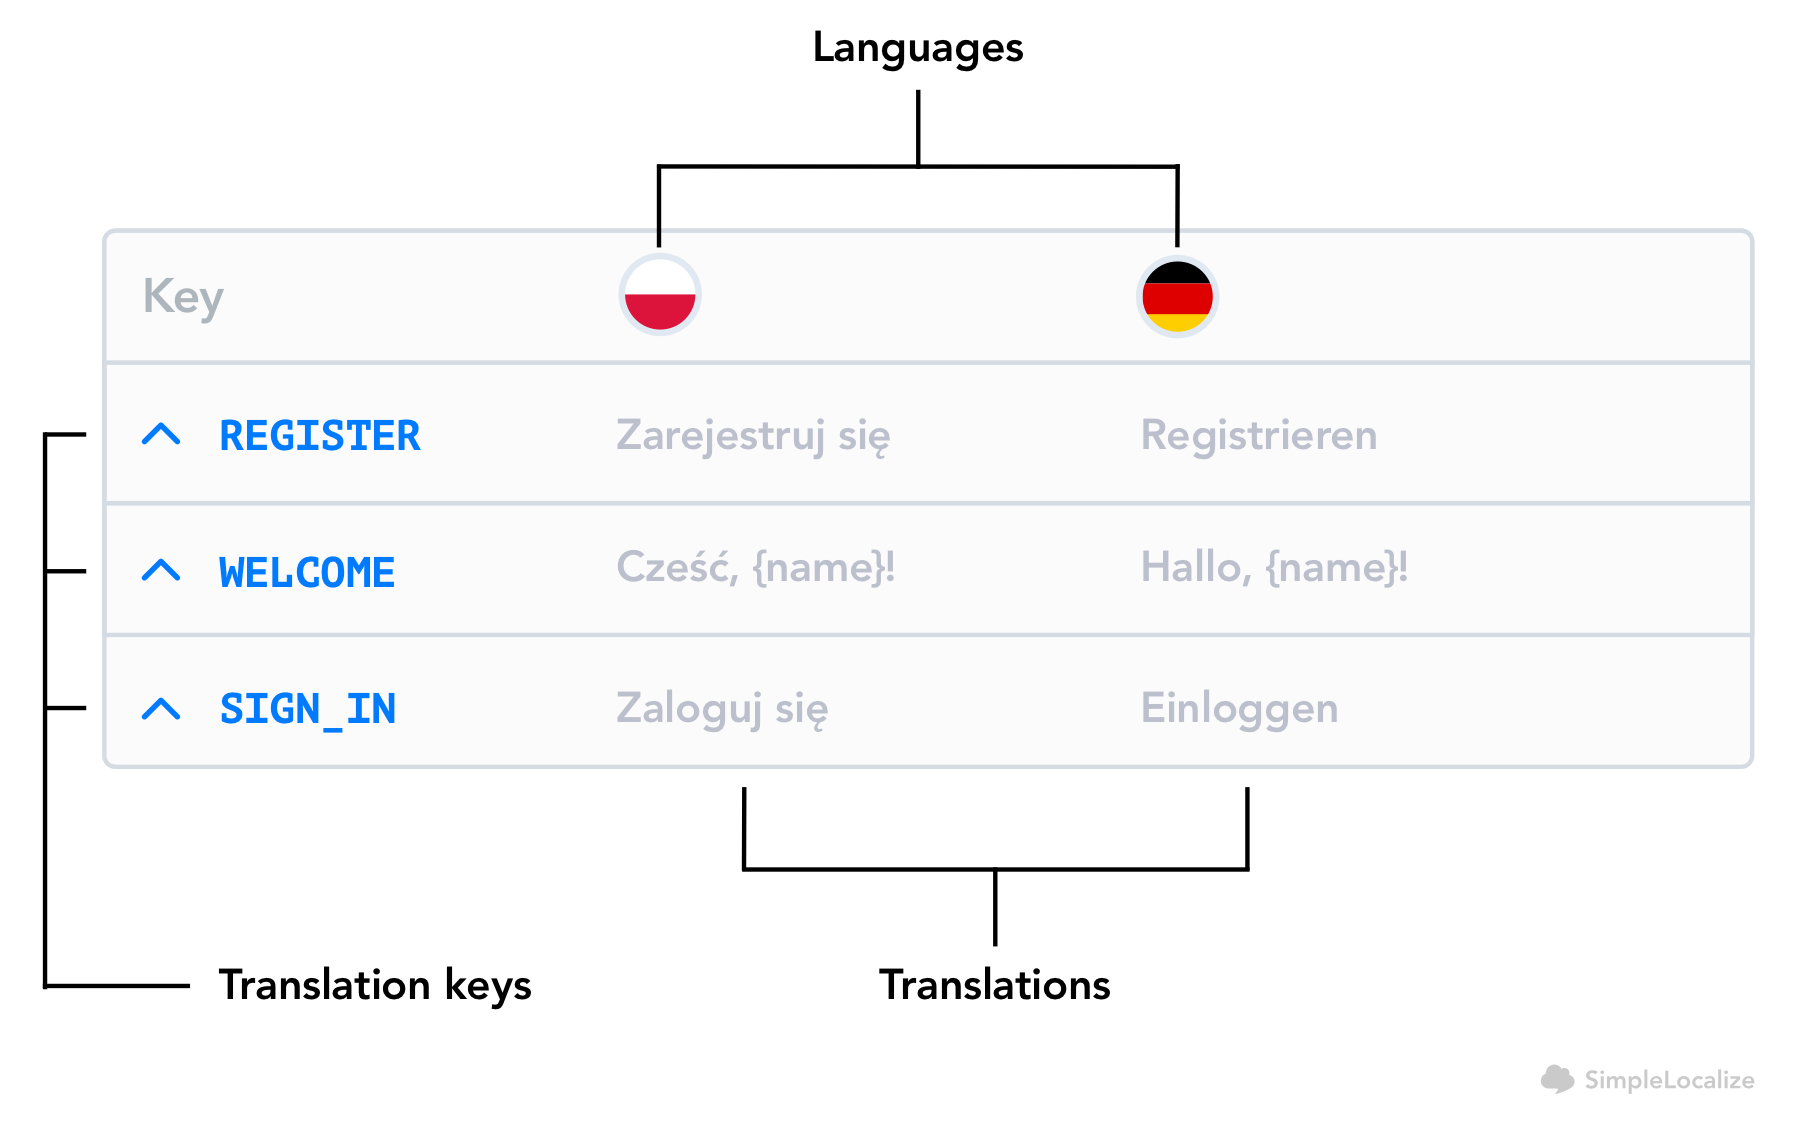 Translation keys and translations